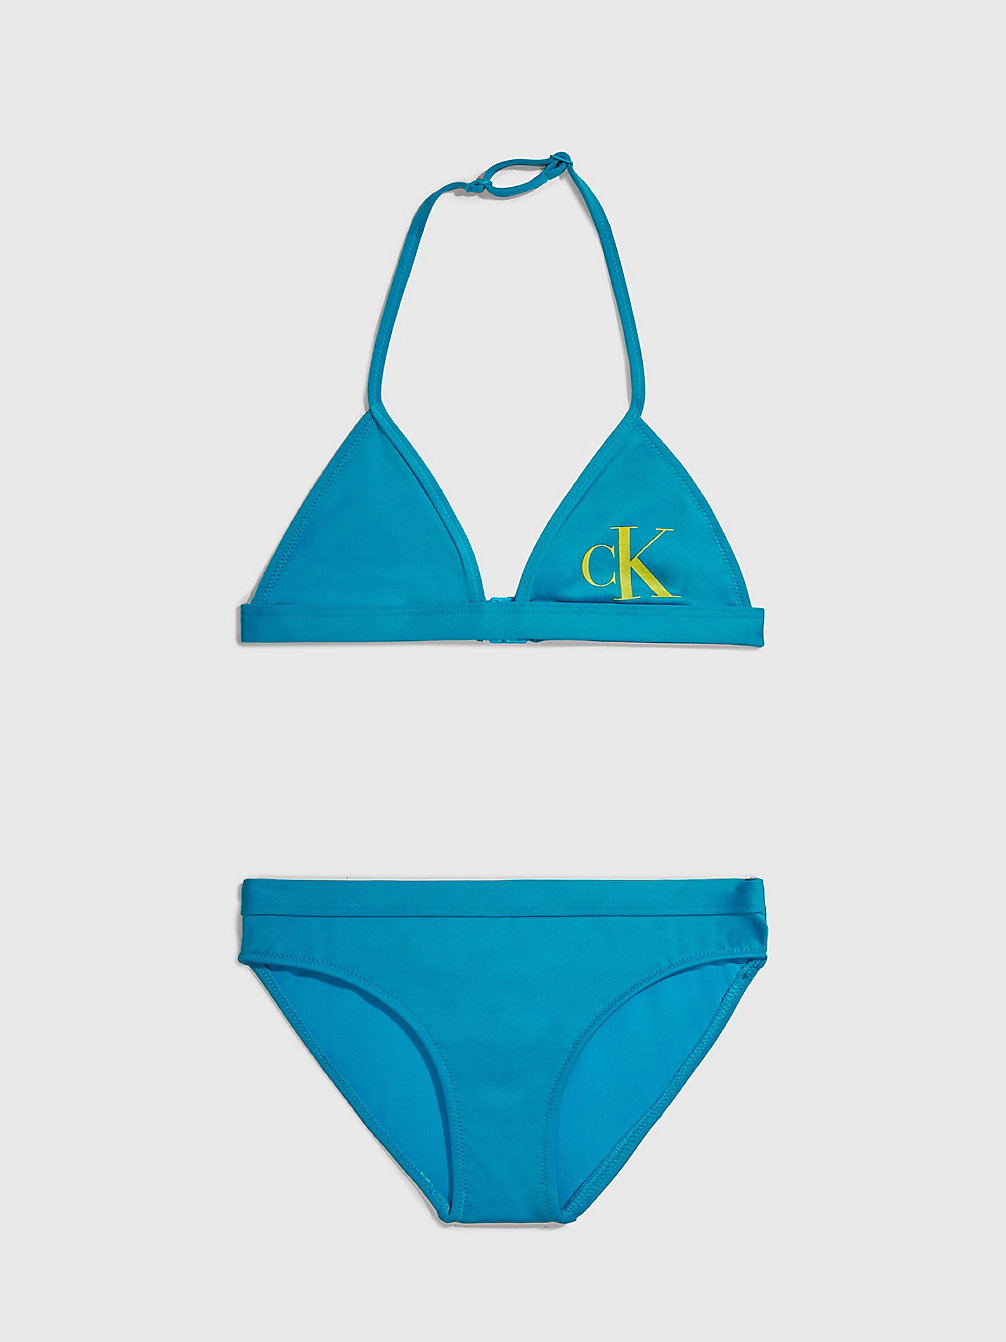 CLEAR TURQUOISE Ensemble Bikini Triangle Pour Fille - CK Monogram undefined girls Calvin Klein